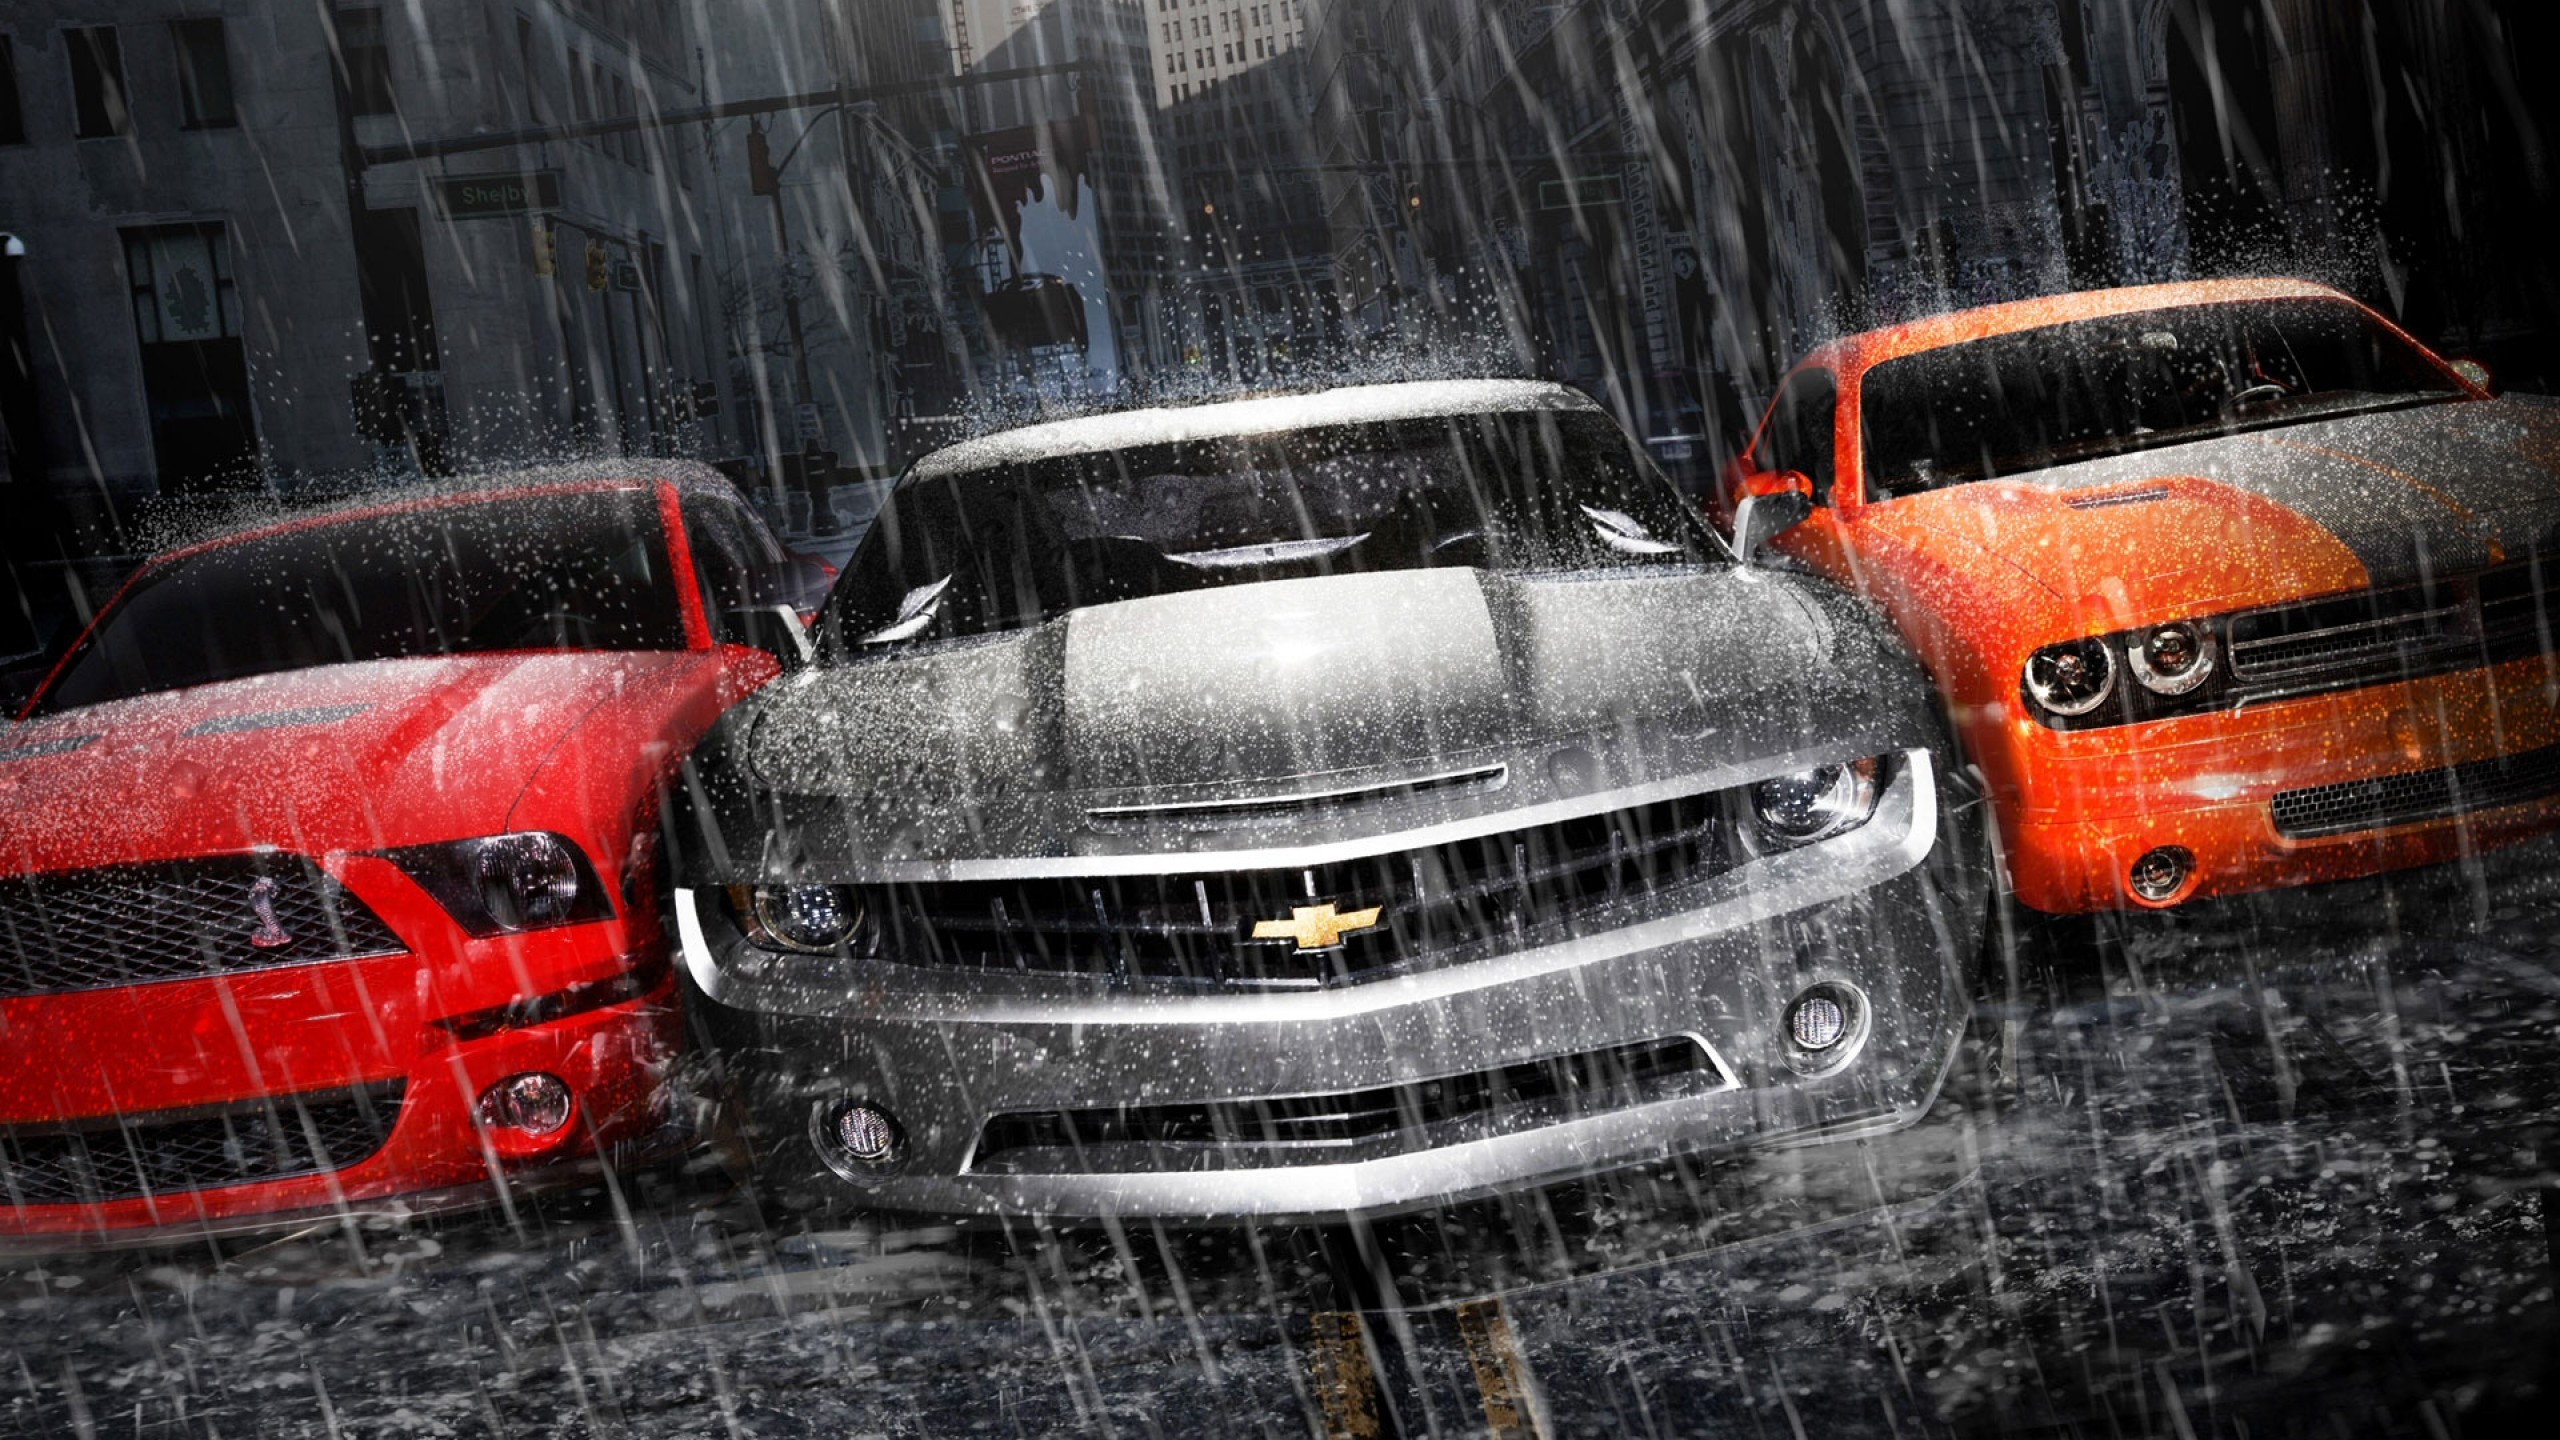 2560x1440 Anime Love Cars Camero Mustang Dodge Hd Jootix 884707 Wallpaper wallpaper